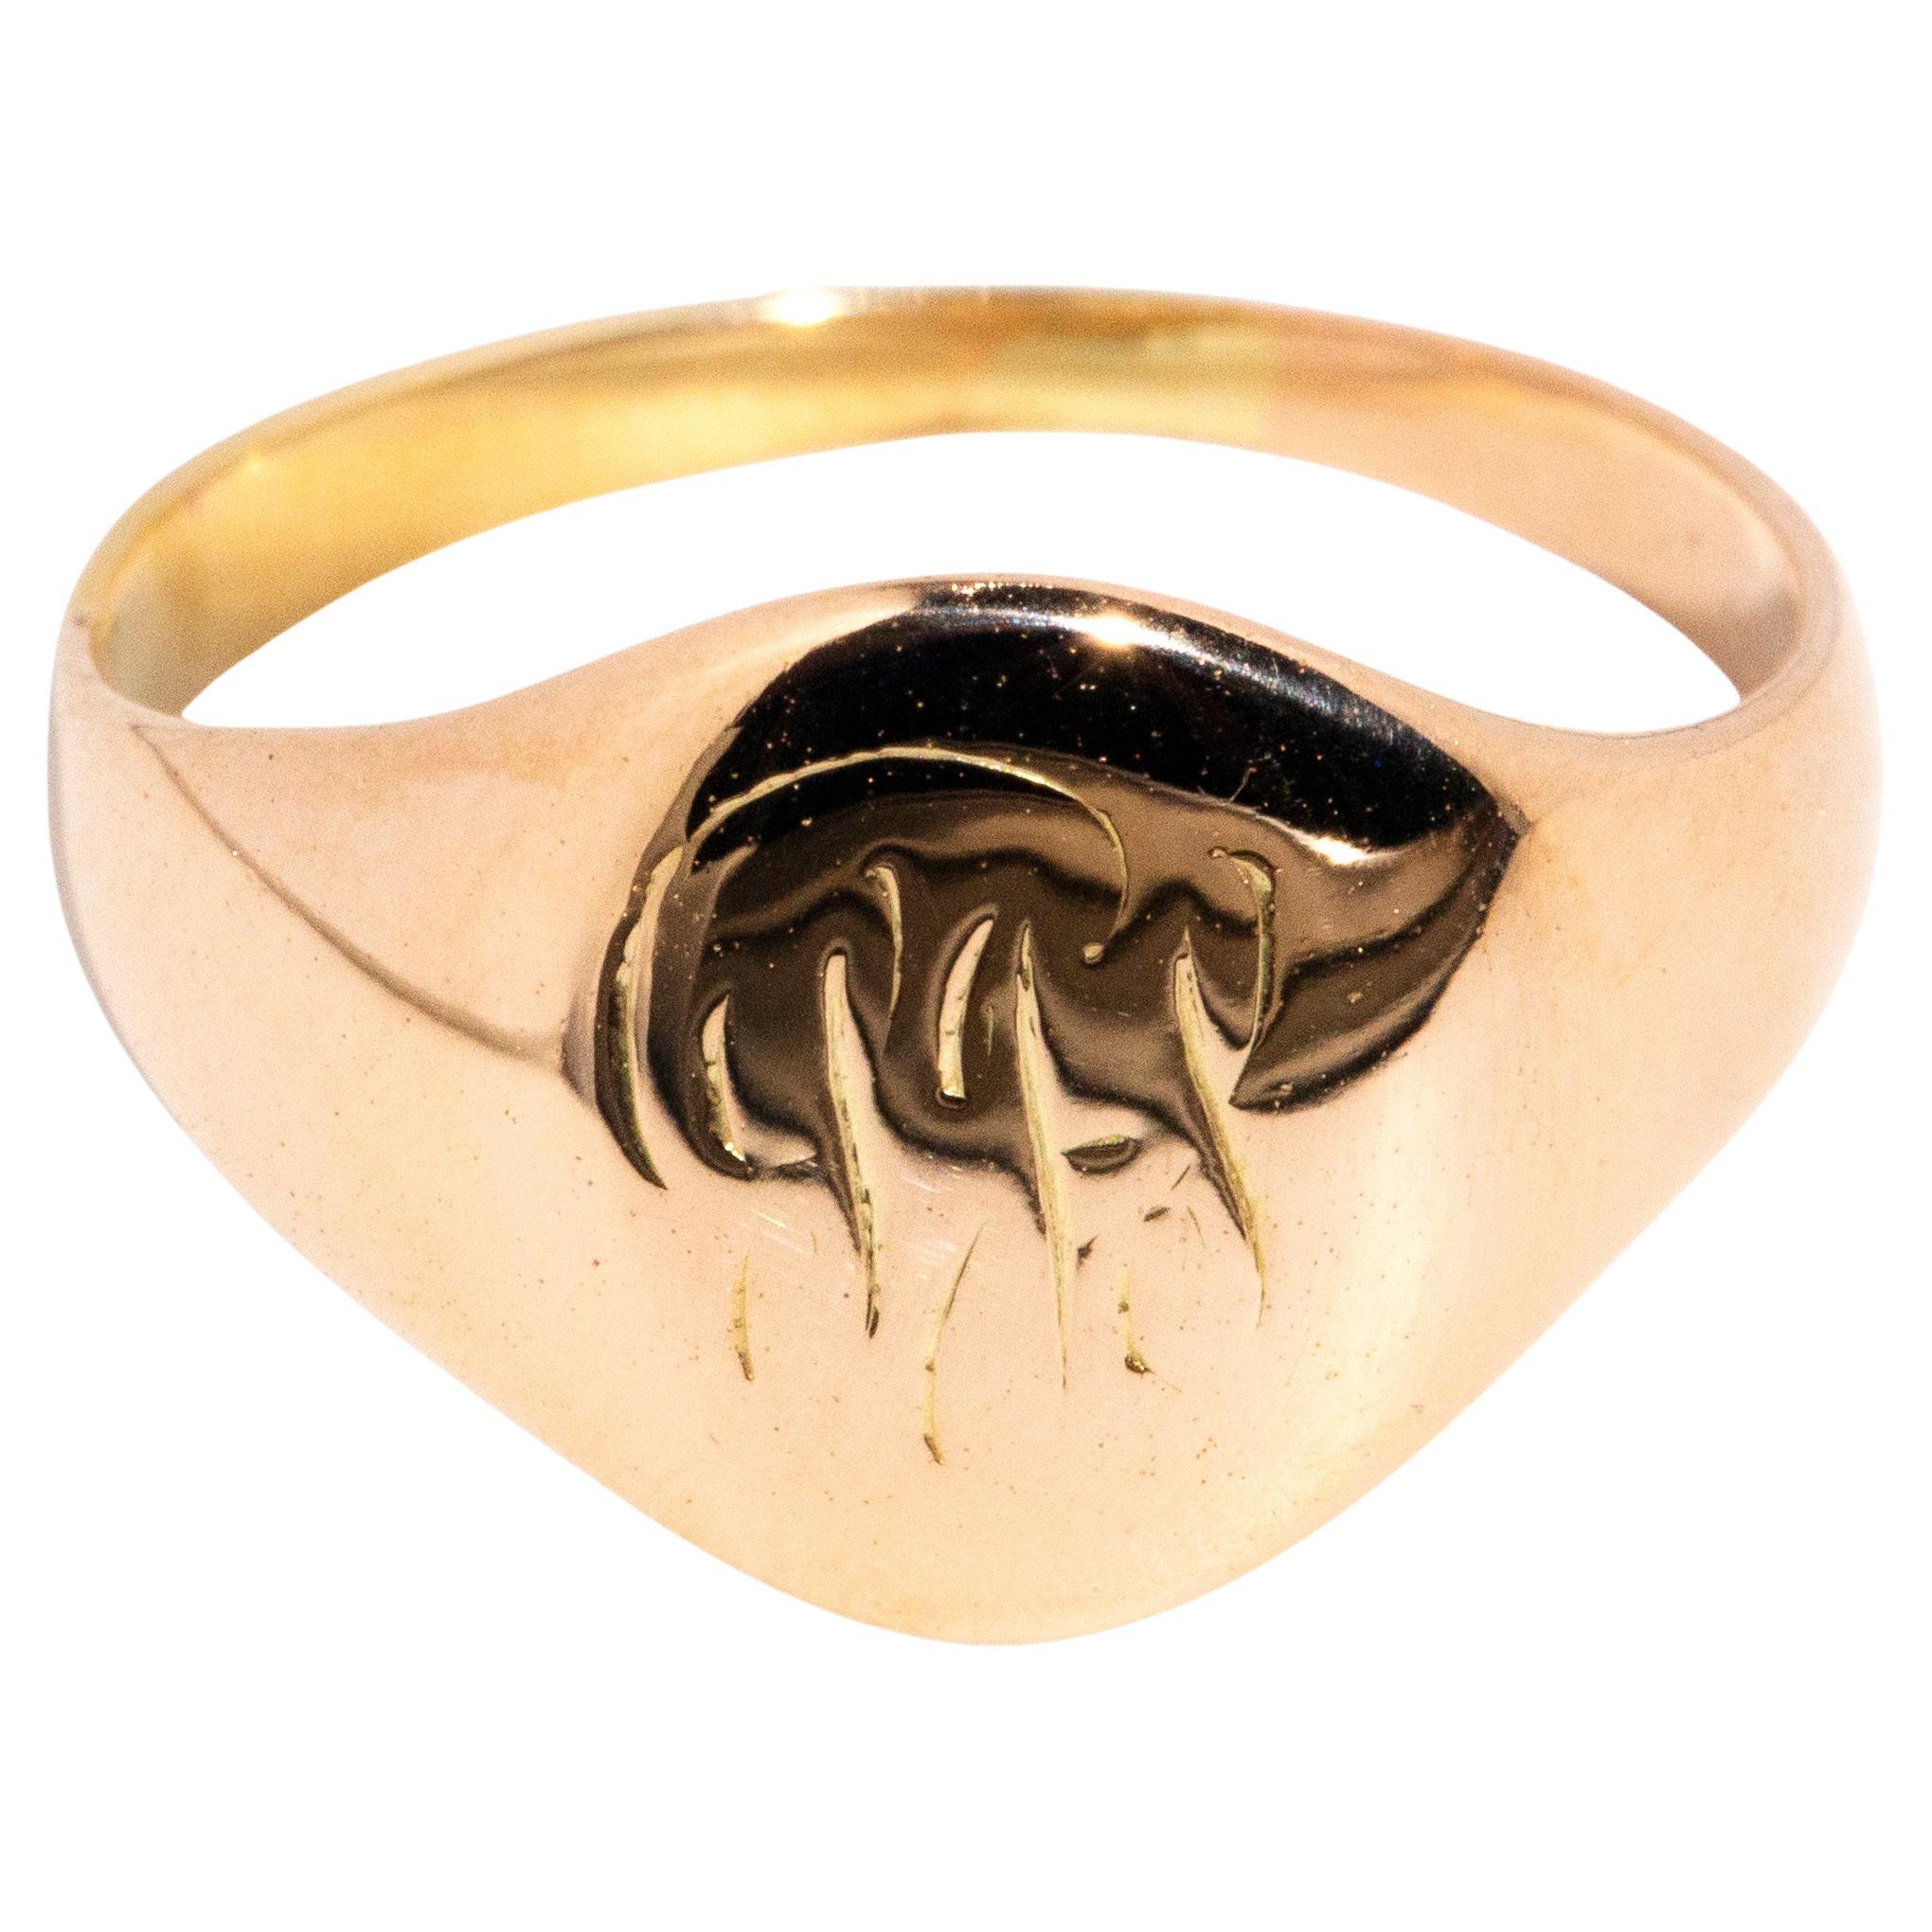 Antique circa 1920s 14 Carat Rose Gold "Hb" Inscribed Unisex Signet Ring For Sale